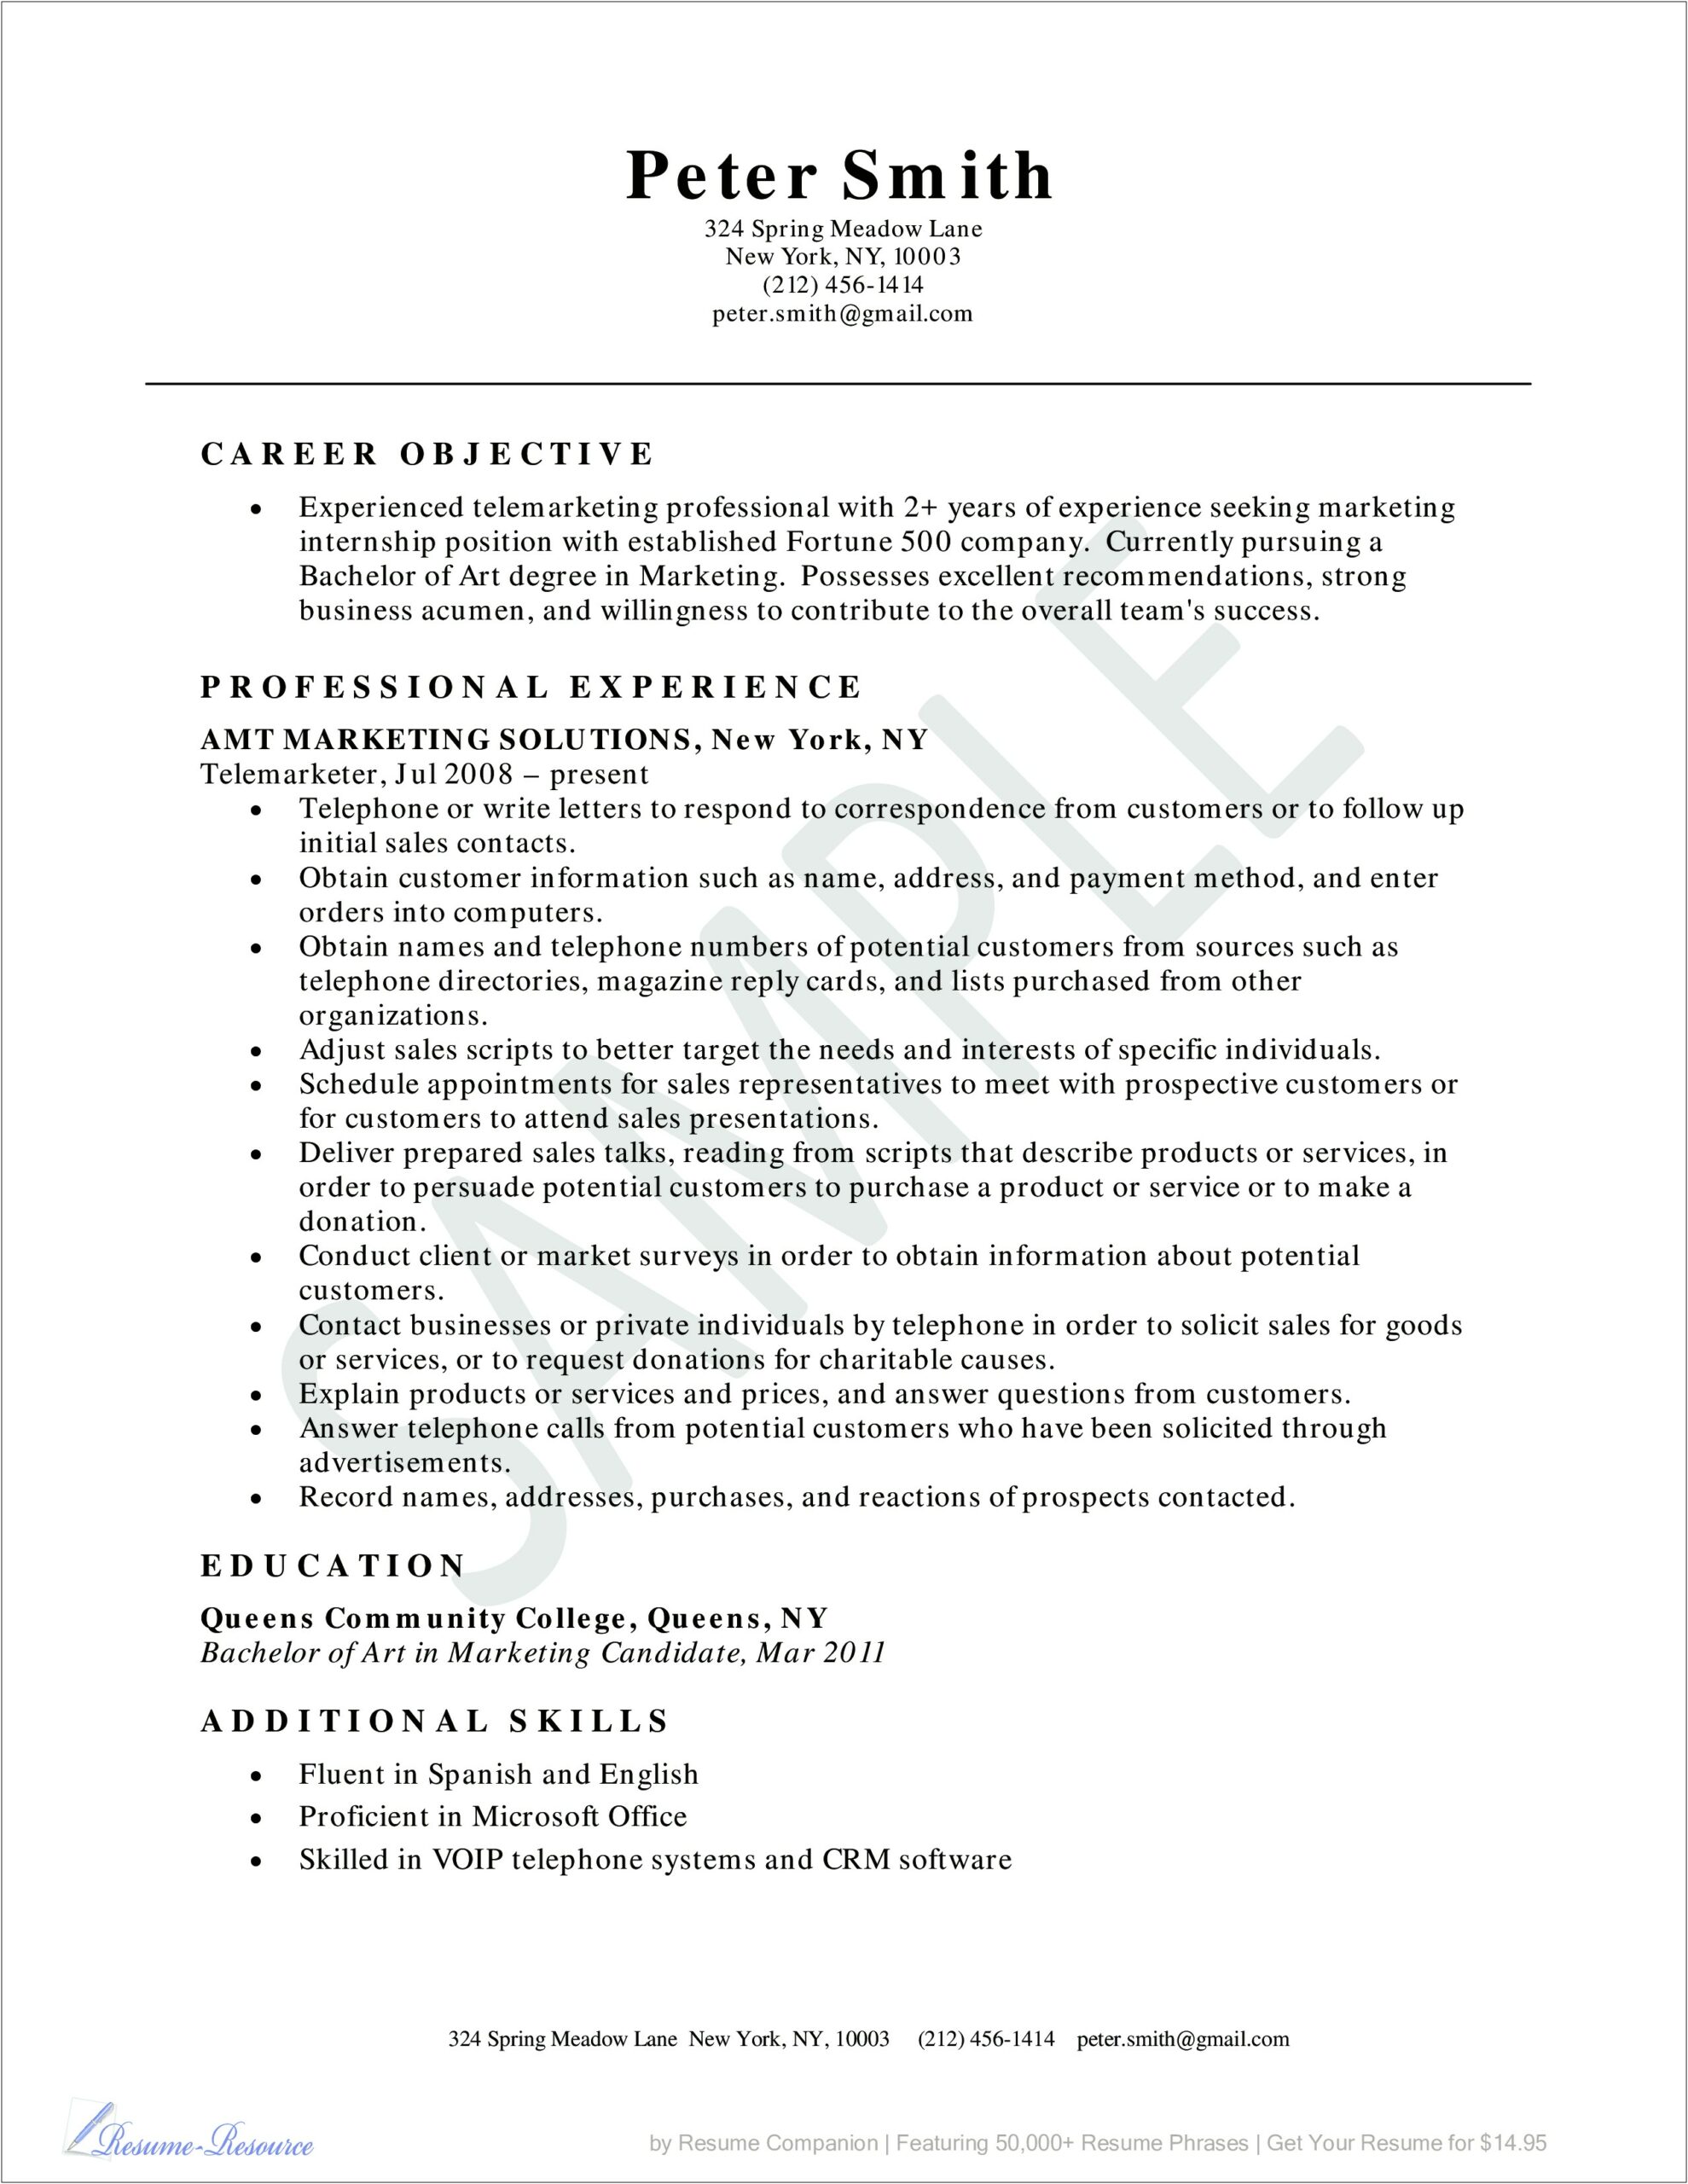 Resume Objective For Telemarketing Job